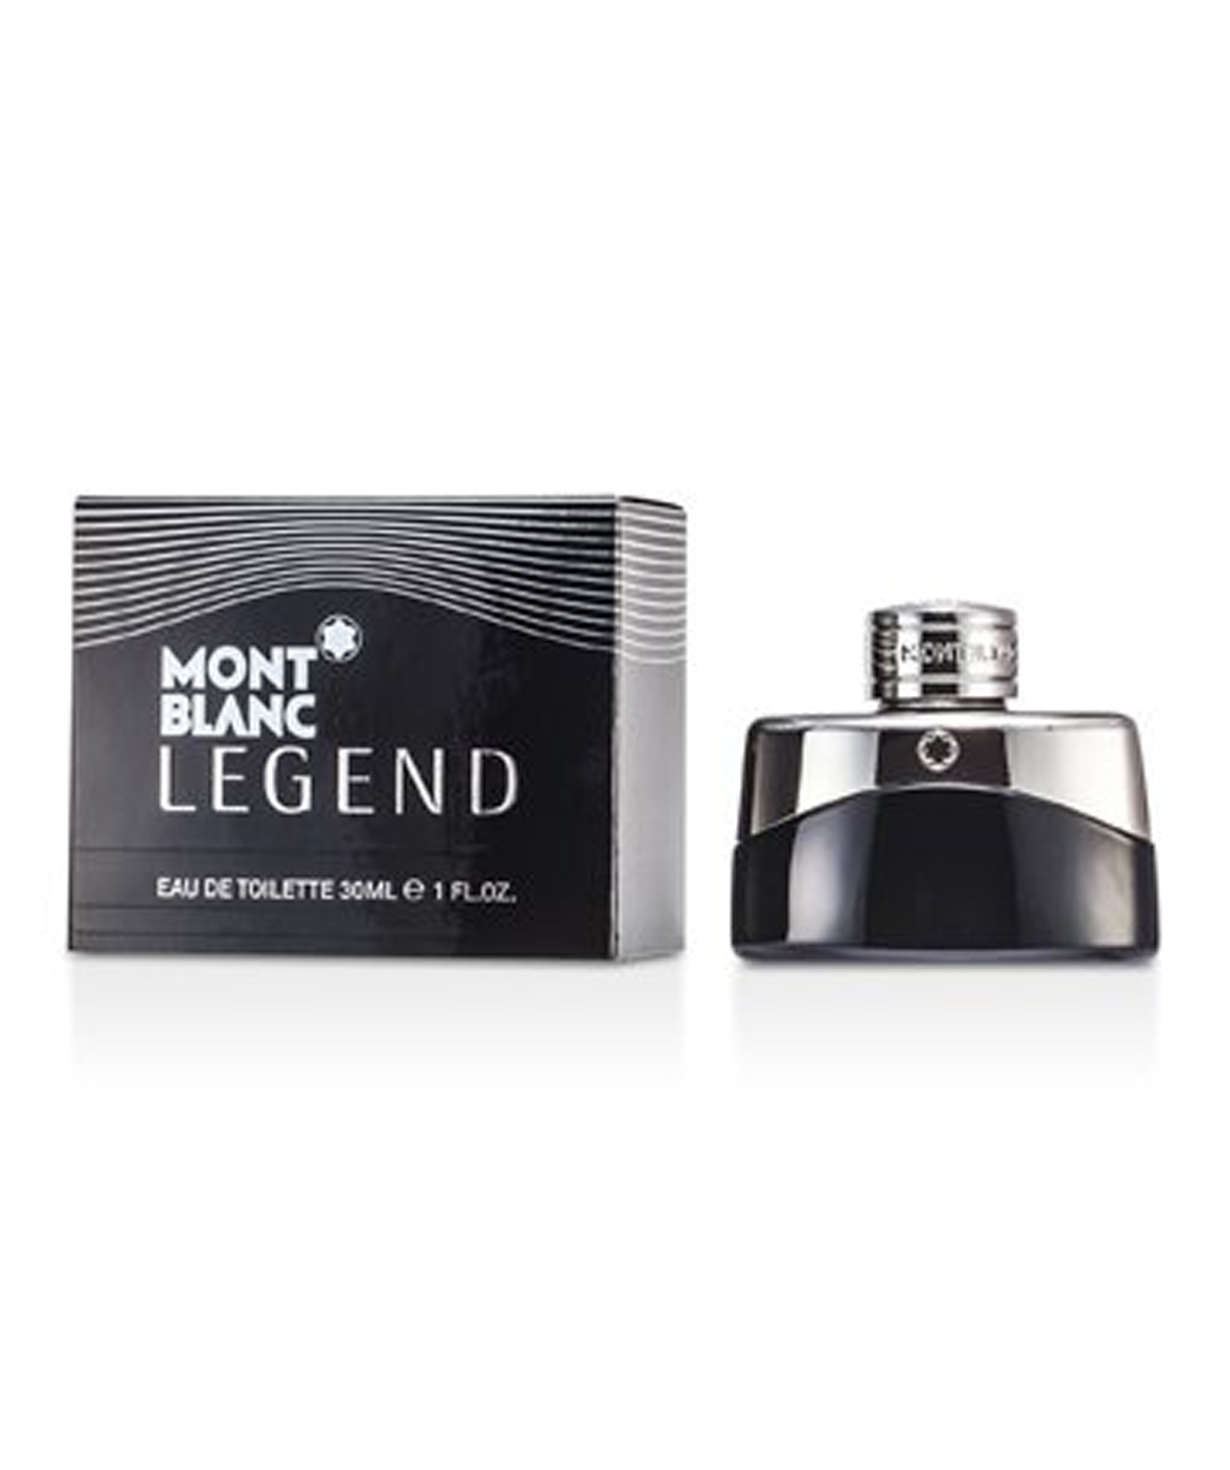 Perfume «Montblanc» Legend EDT, for men, 30 ml